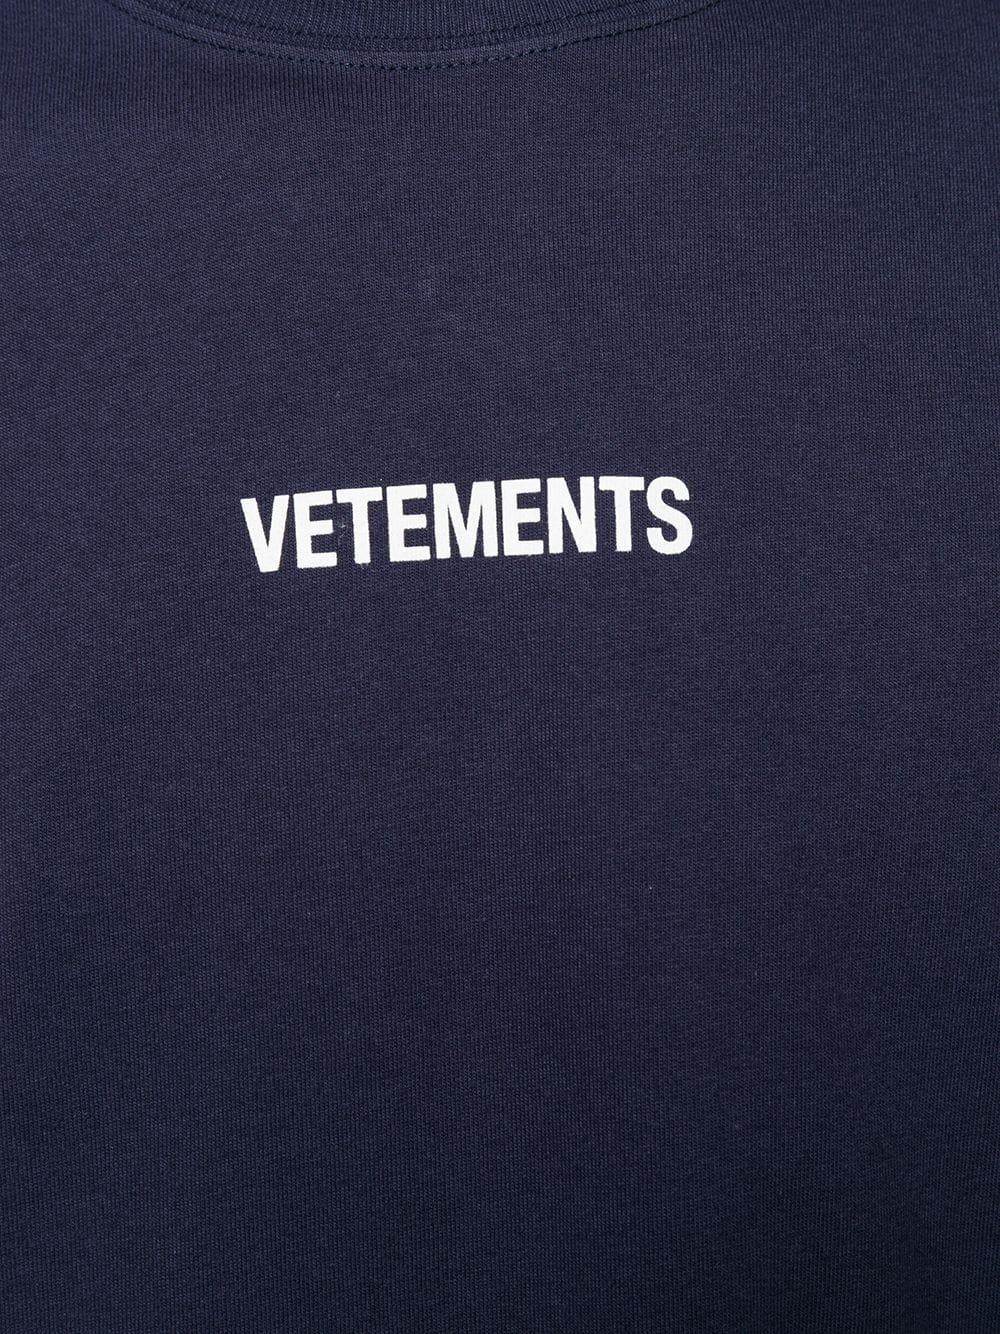 Vetements Cotton Logo T-shirt in Navy (Blue) for Men - Lyst